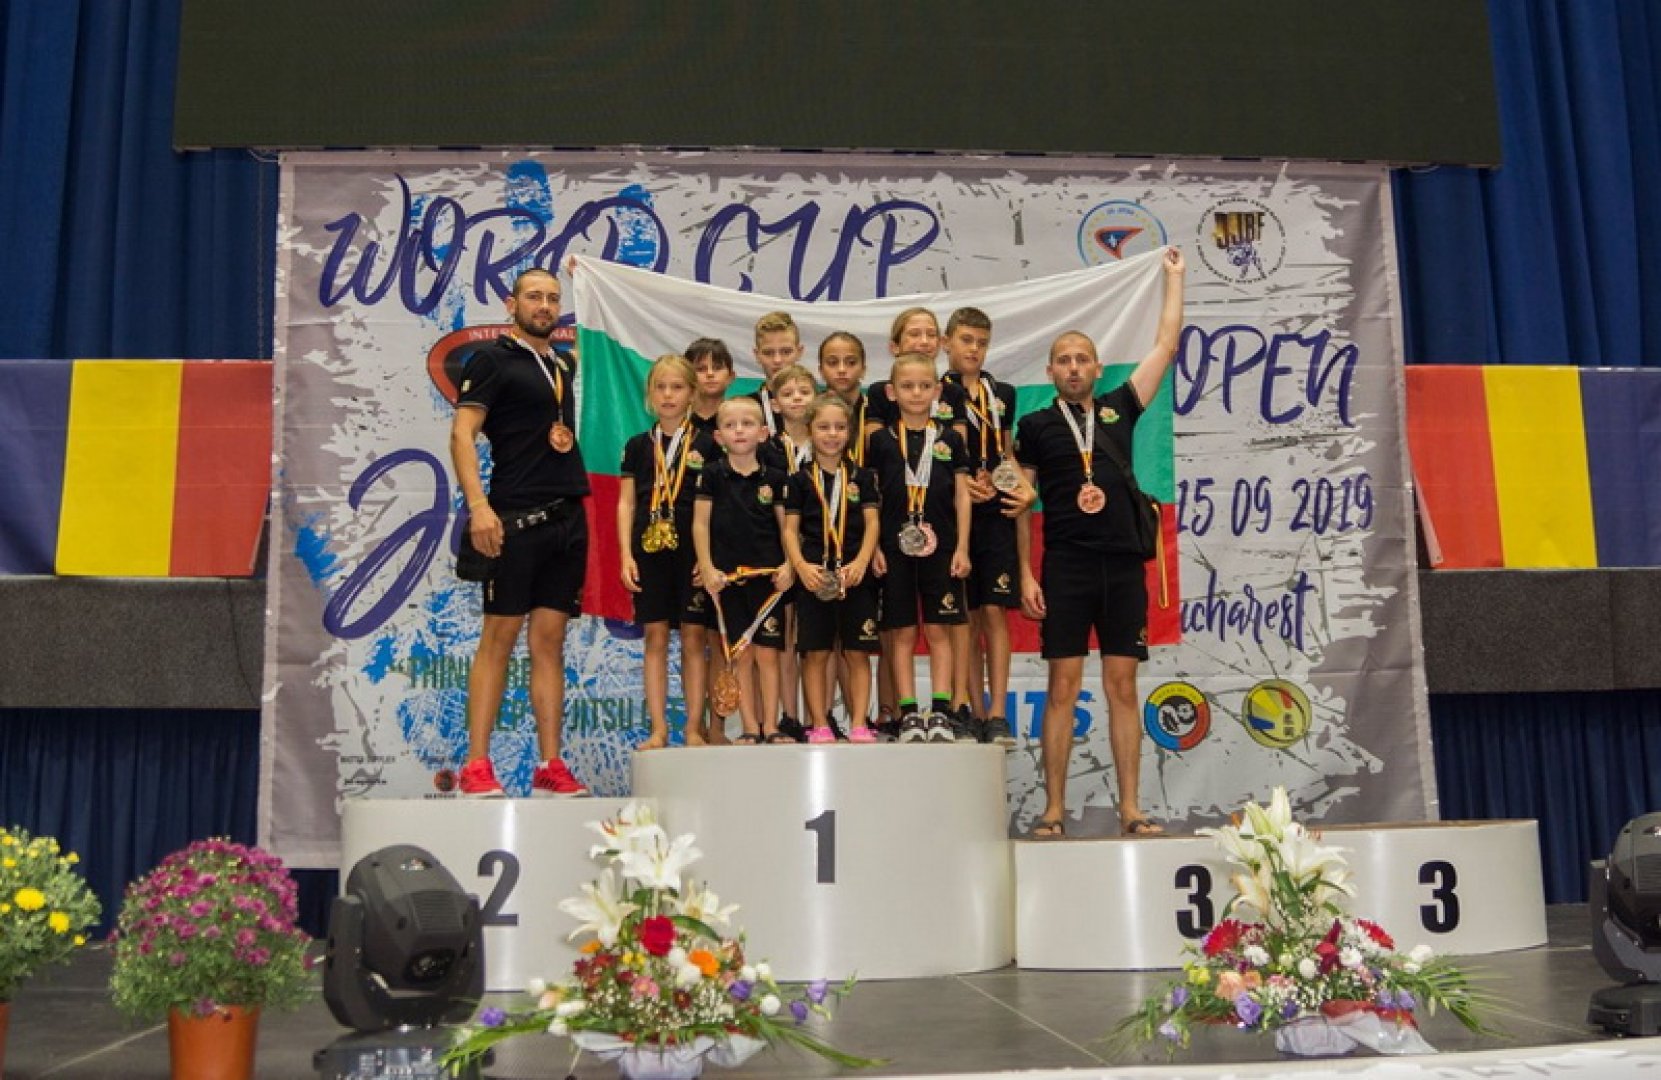 18 медала извоюваха бургазлии от полицейския карате клуб - E-Burgas.com